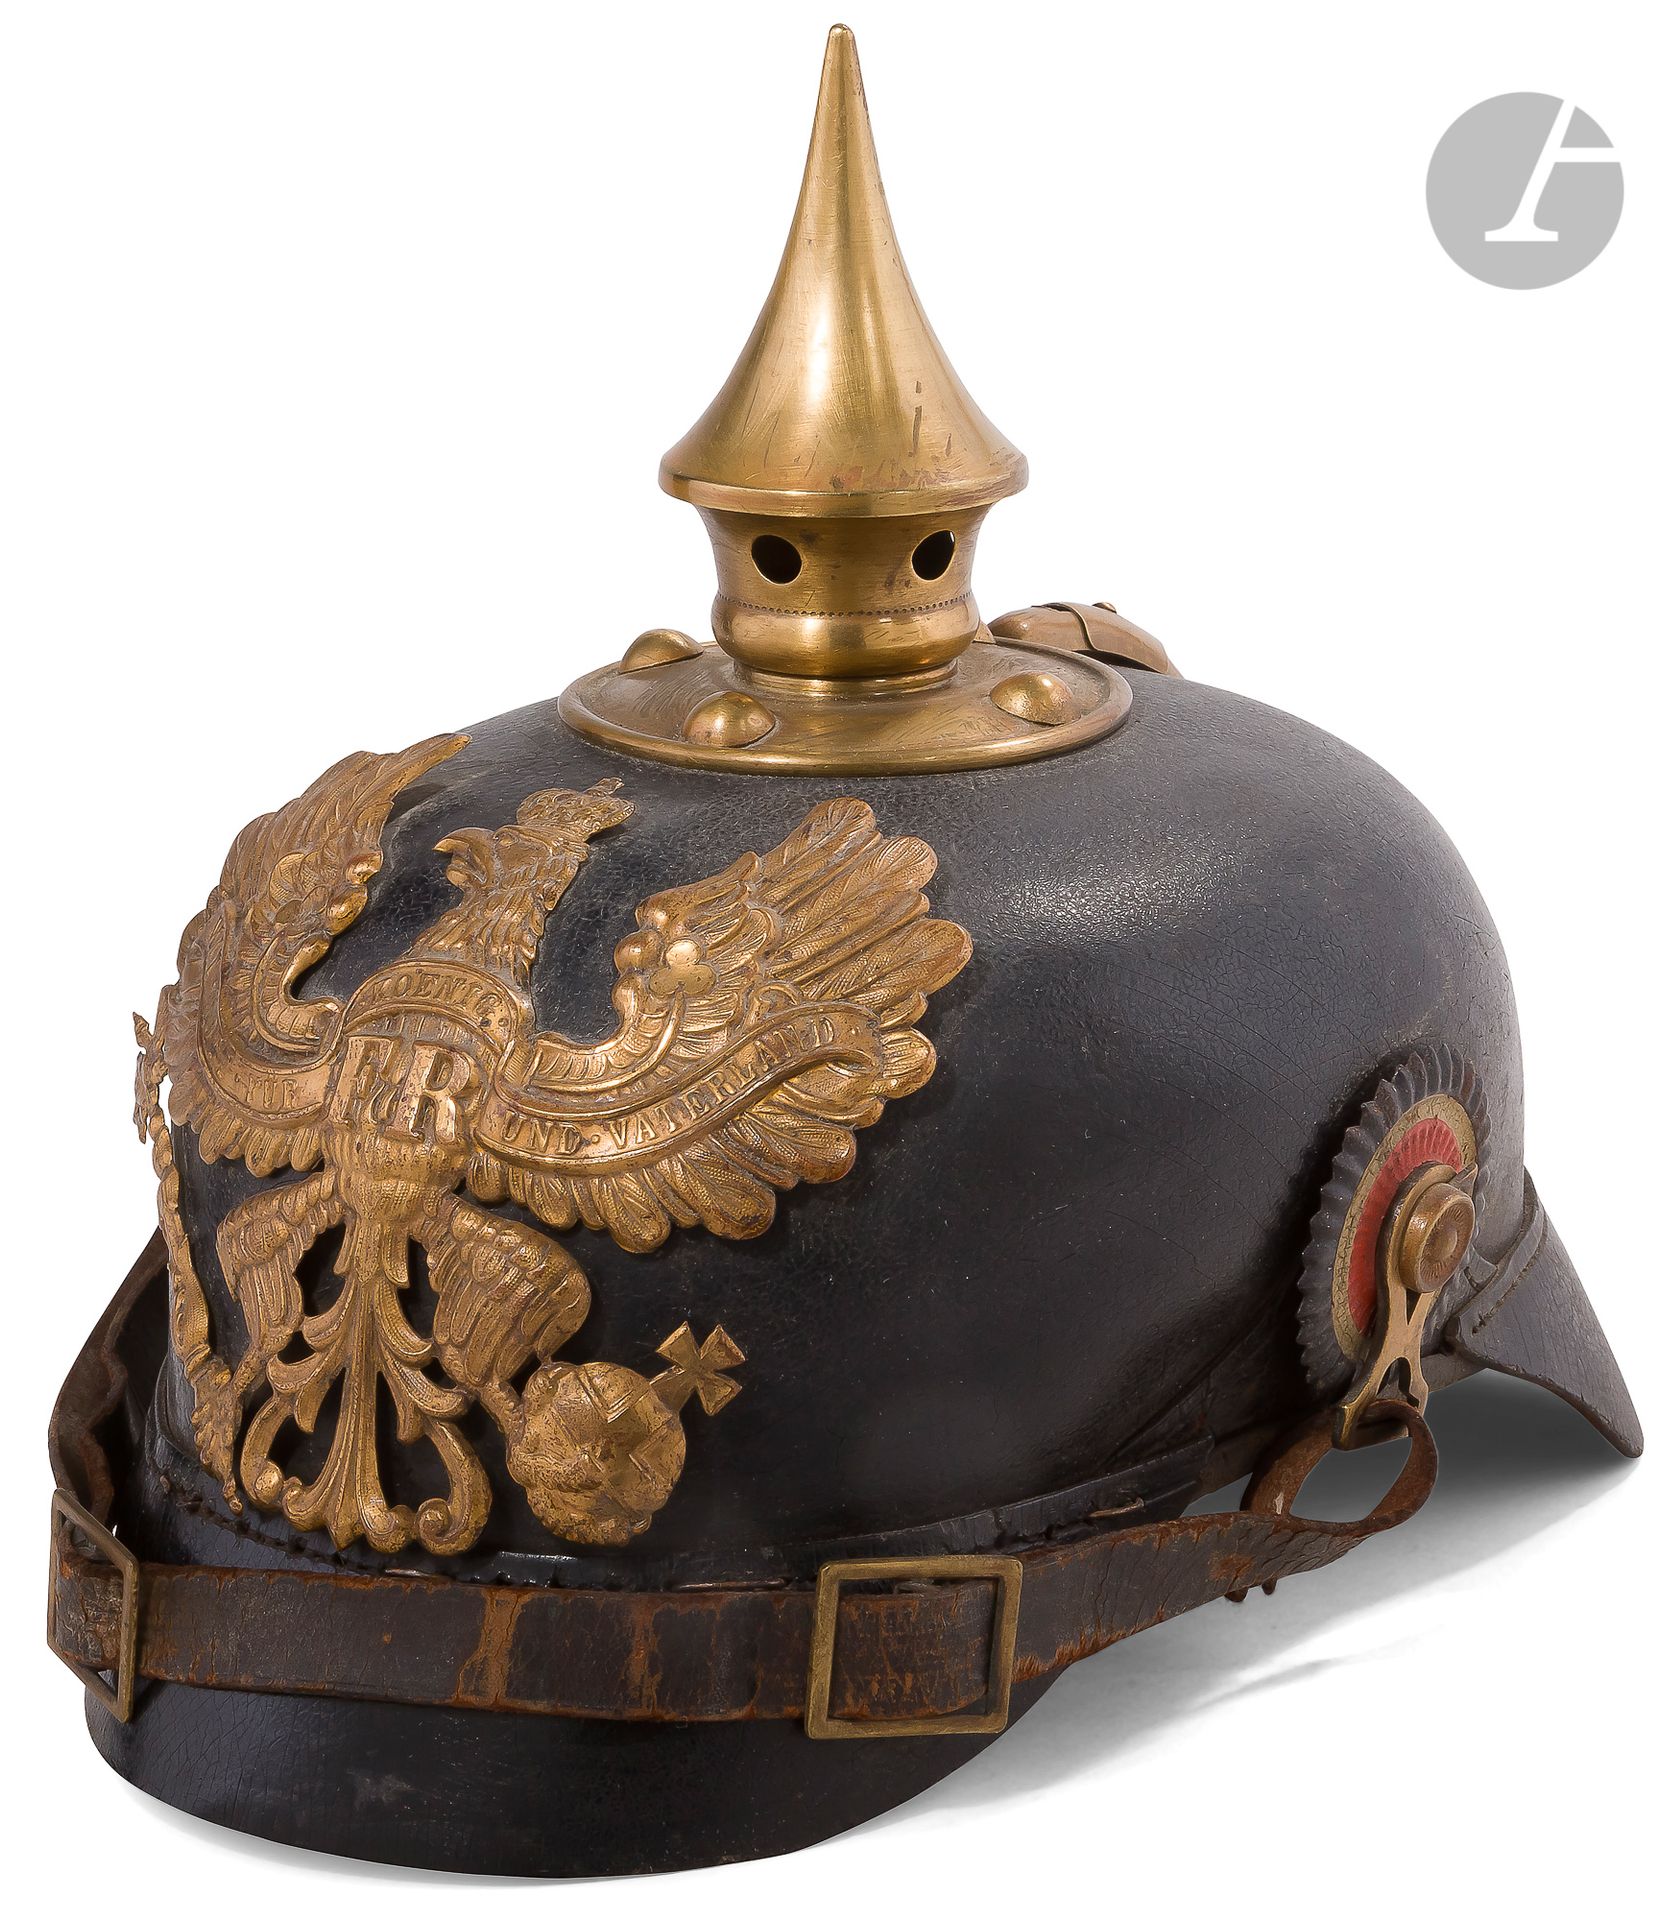 Null 普鲁士1895型头盔，带
皮制
下巴。
铜质的鹰、点、冲的盘子，鸡冠花。皮帽内侧标有 "BA 1911 JR 16 1 B"。
E.M.